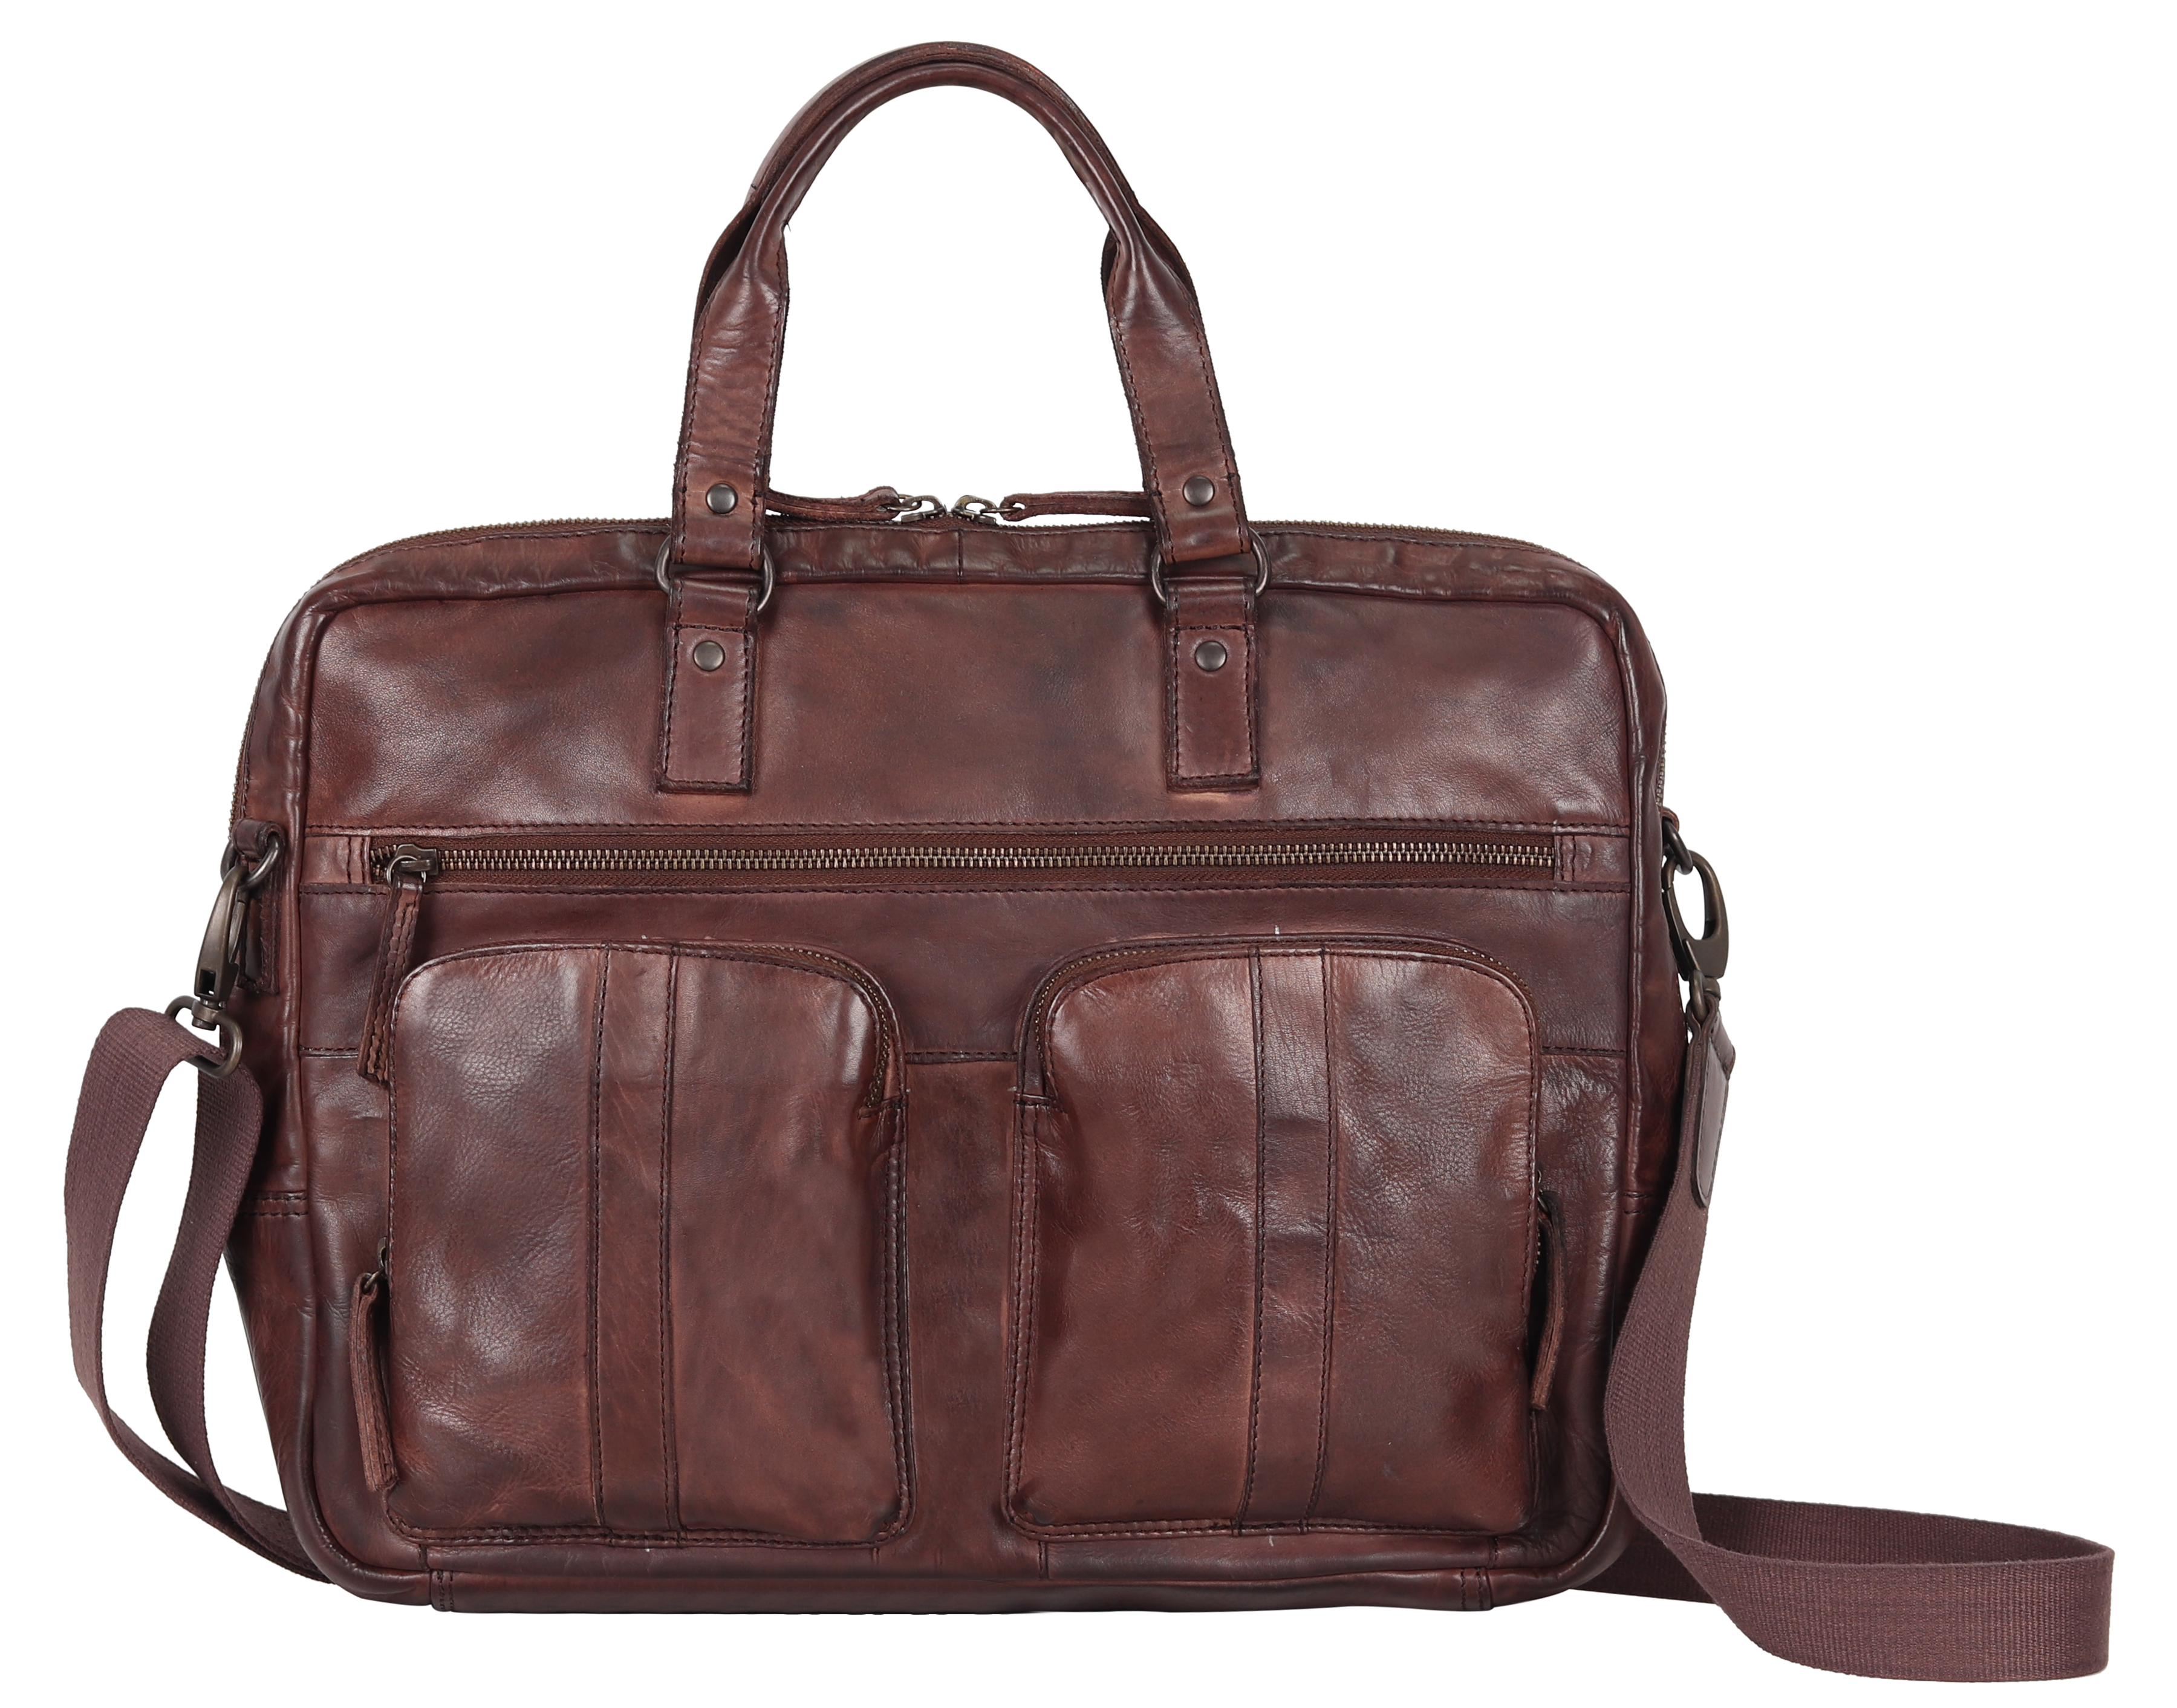 BOL Leather Laptop Messenger Bag